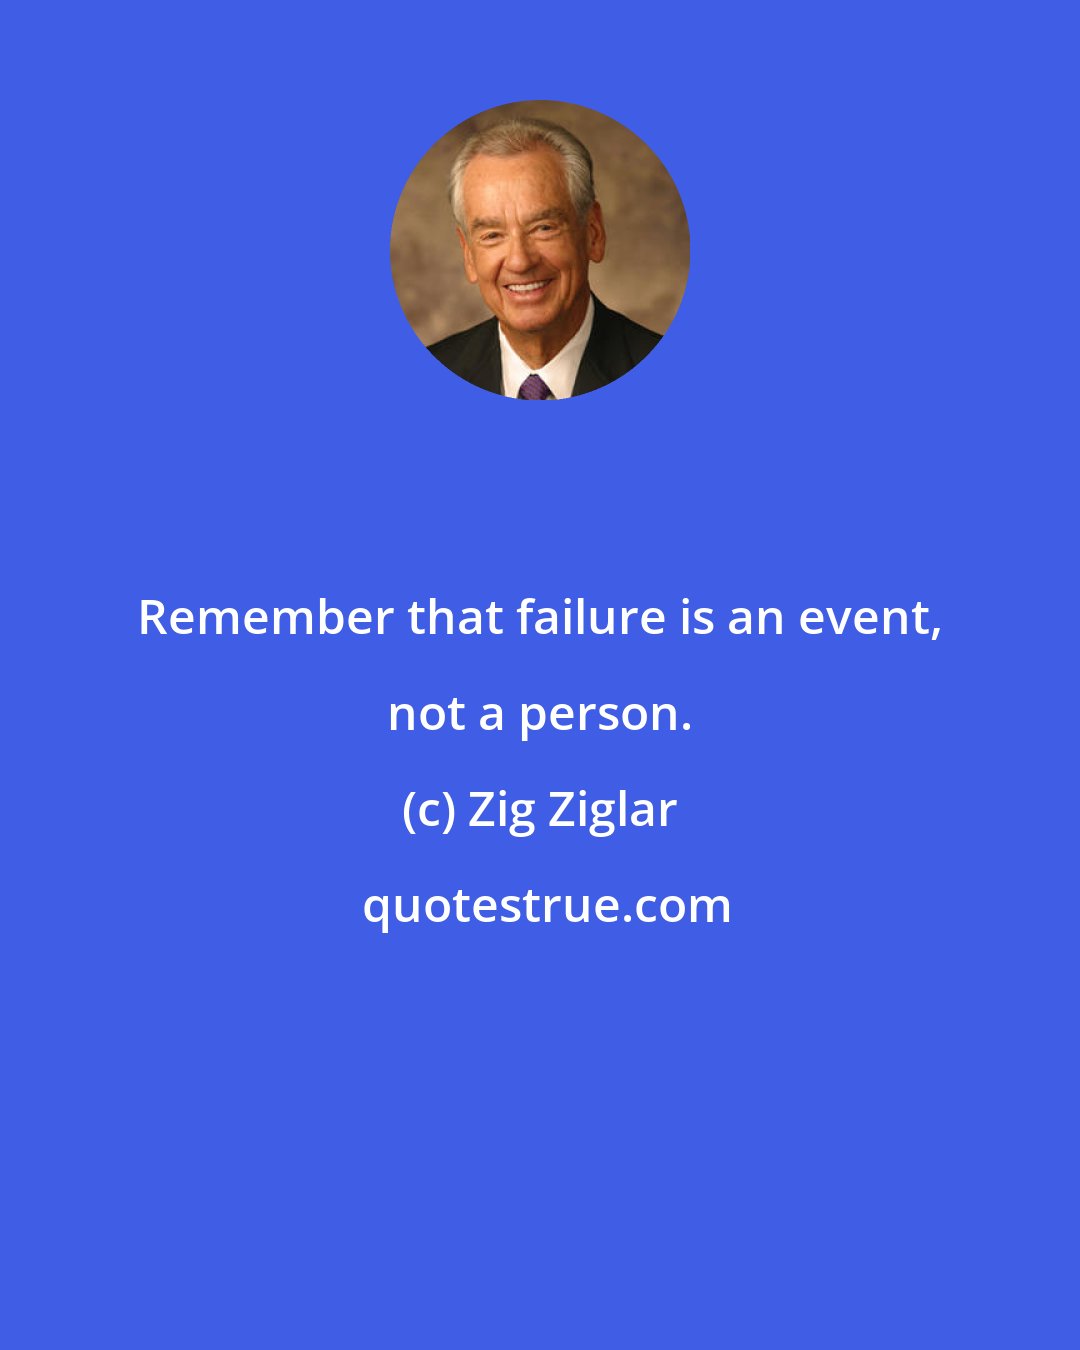 Zig Ziglar: Remember that failure is an event, not a person.